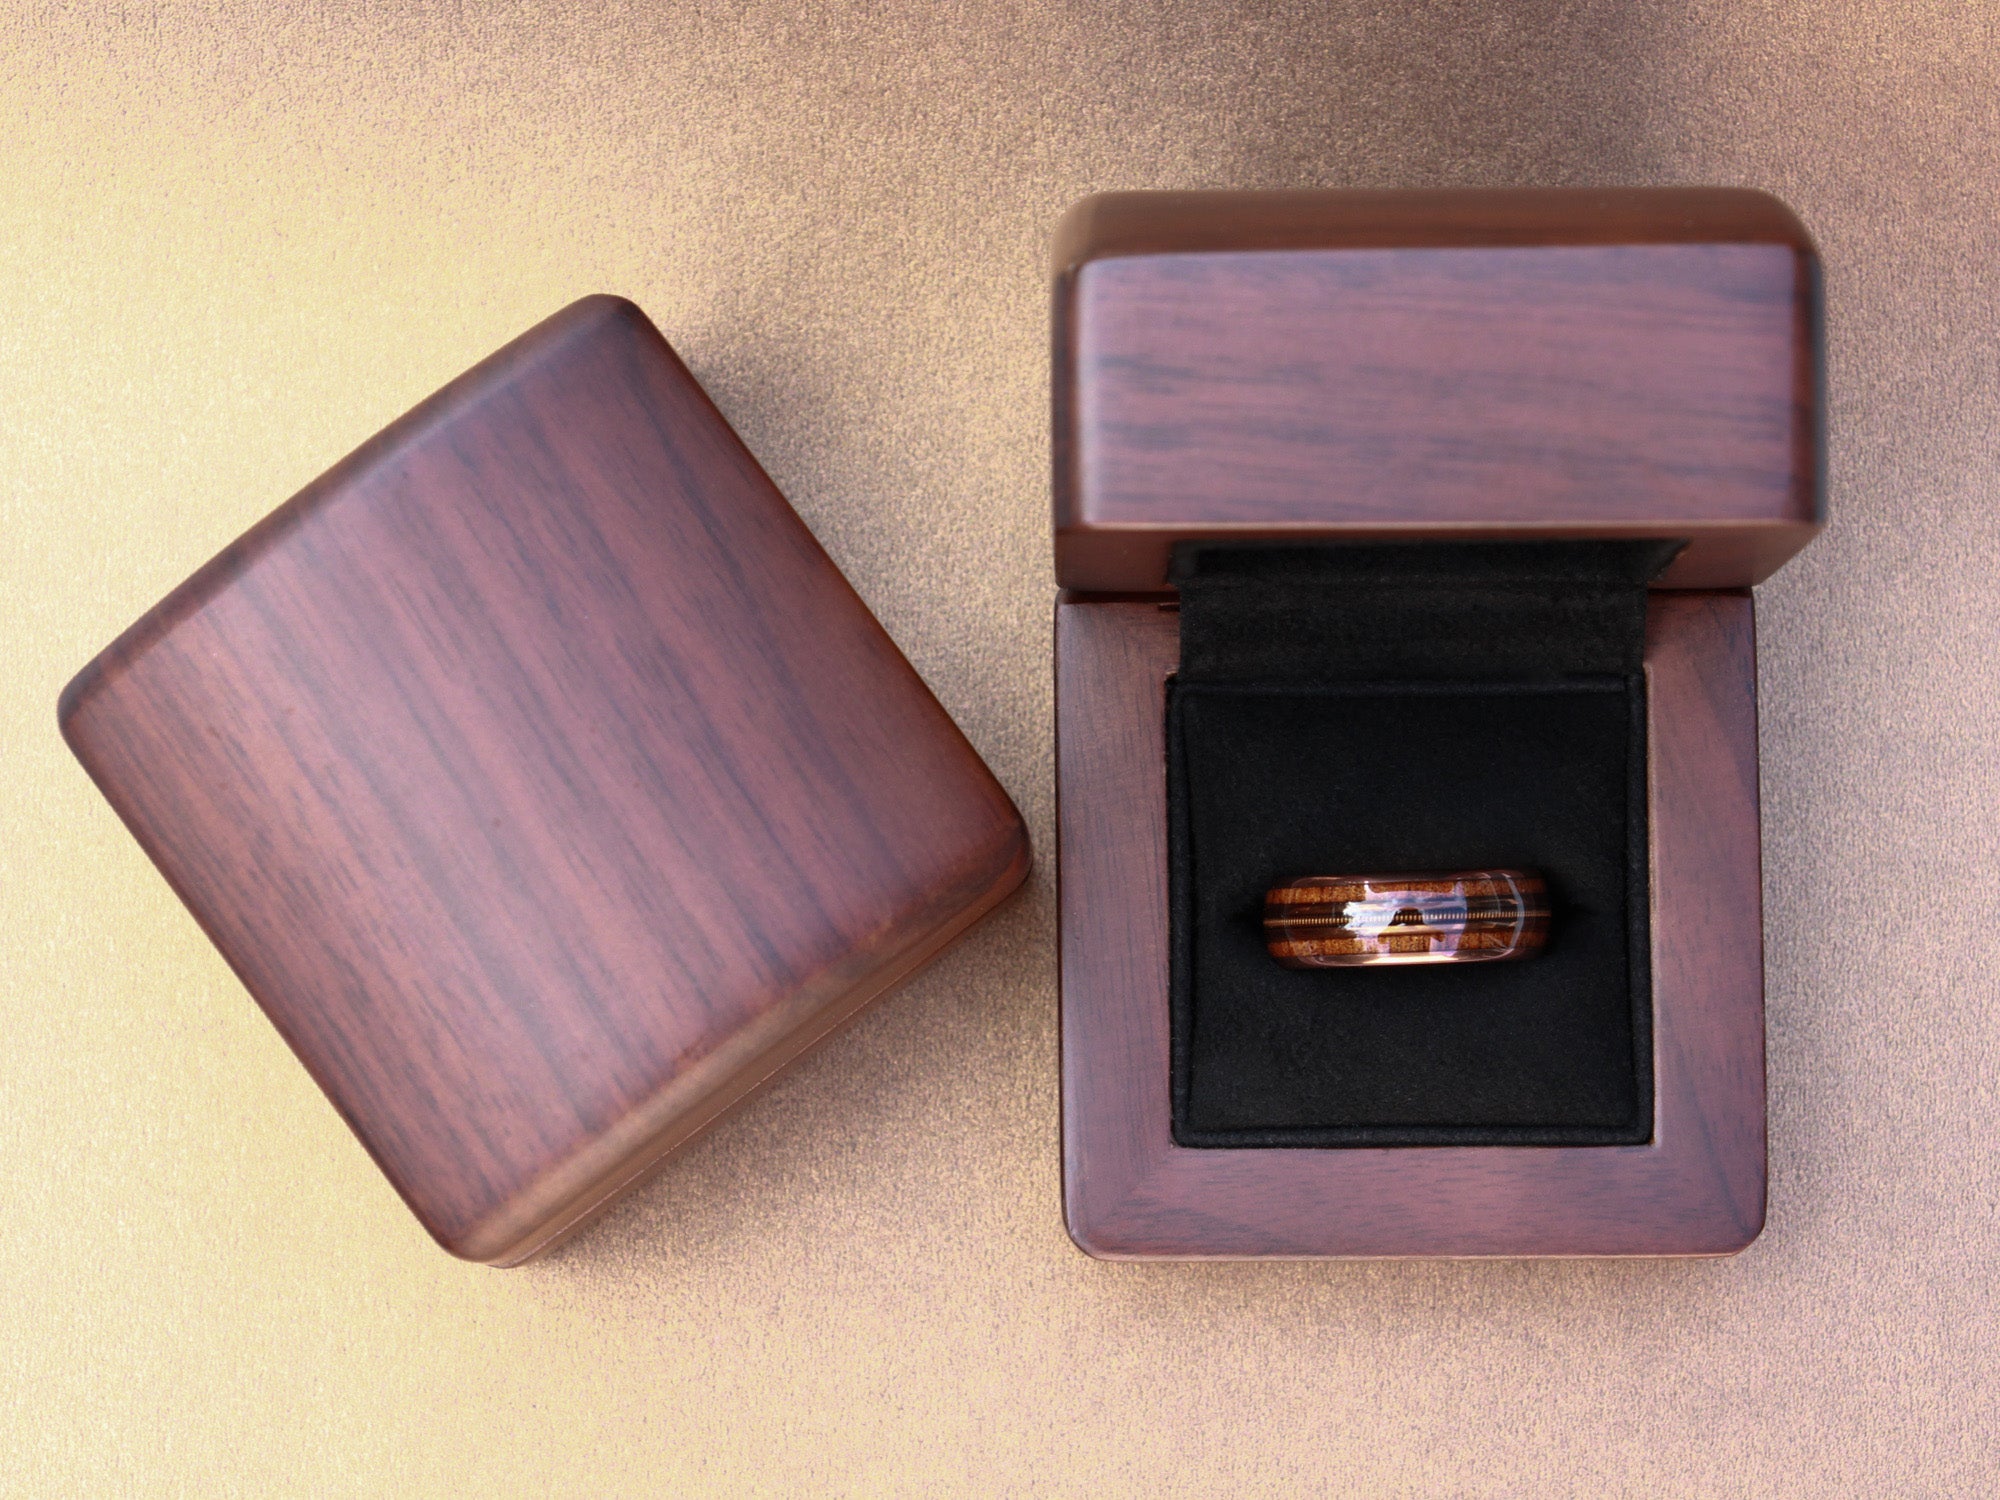 koa guitar string tungsten ring, brown polished tungsten ring with guitar string and koa wood inlays, unique mens wedding ring, walnut wood box